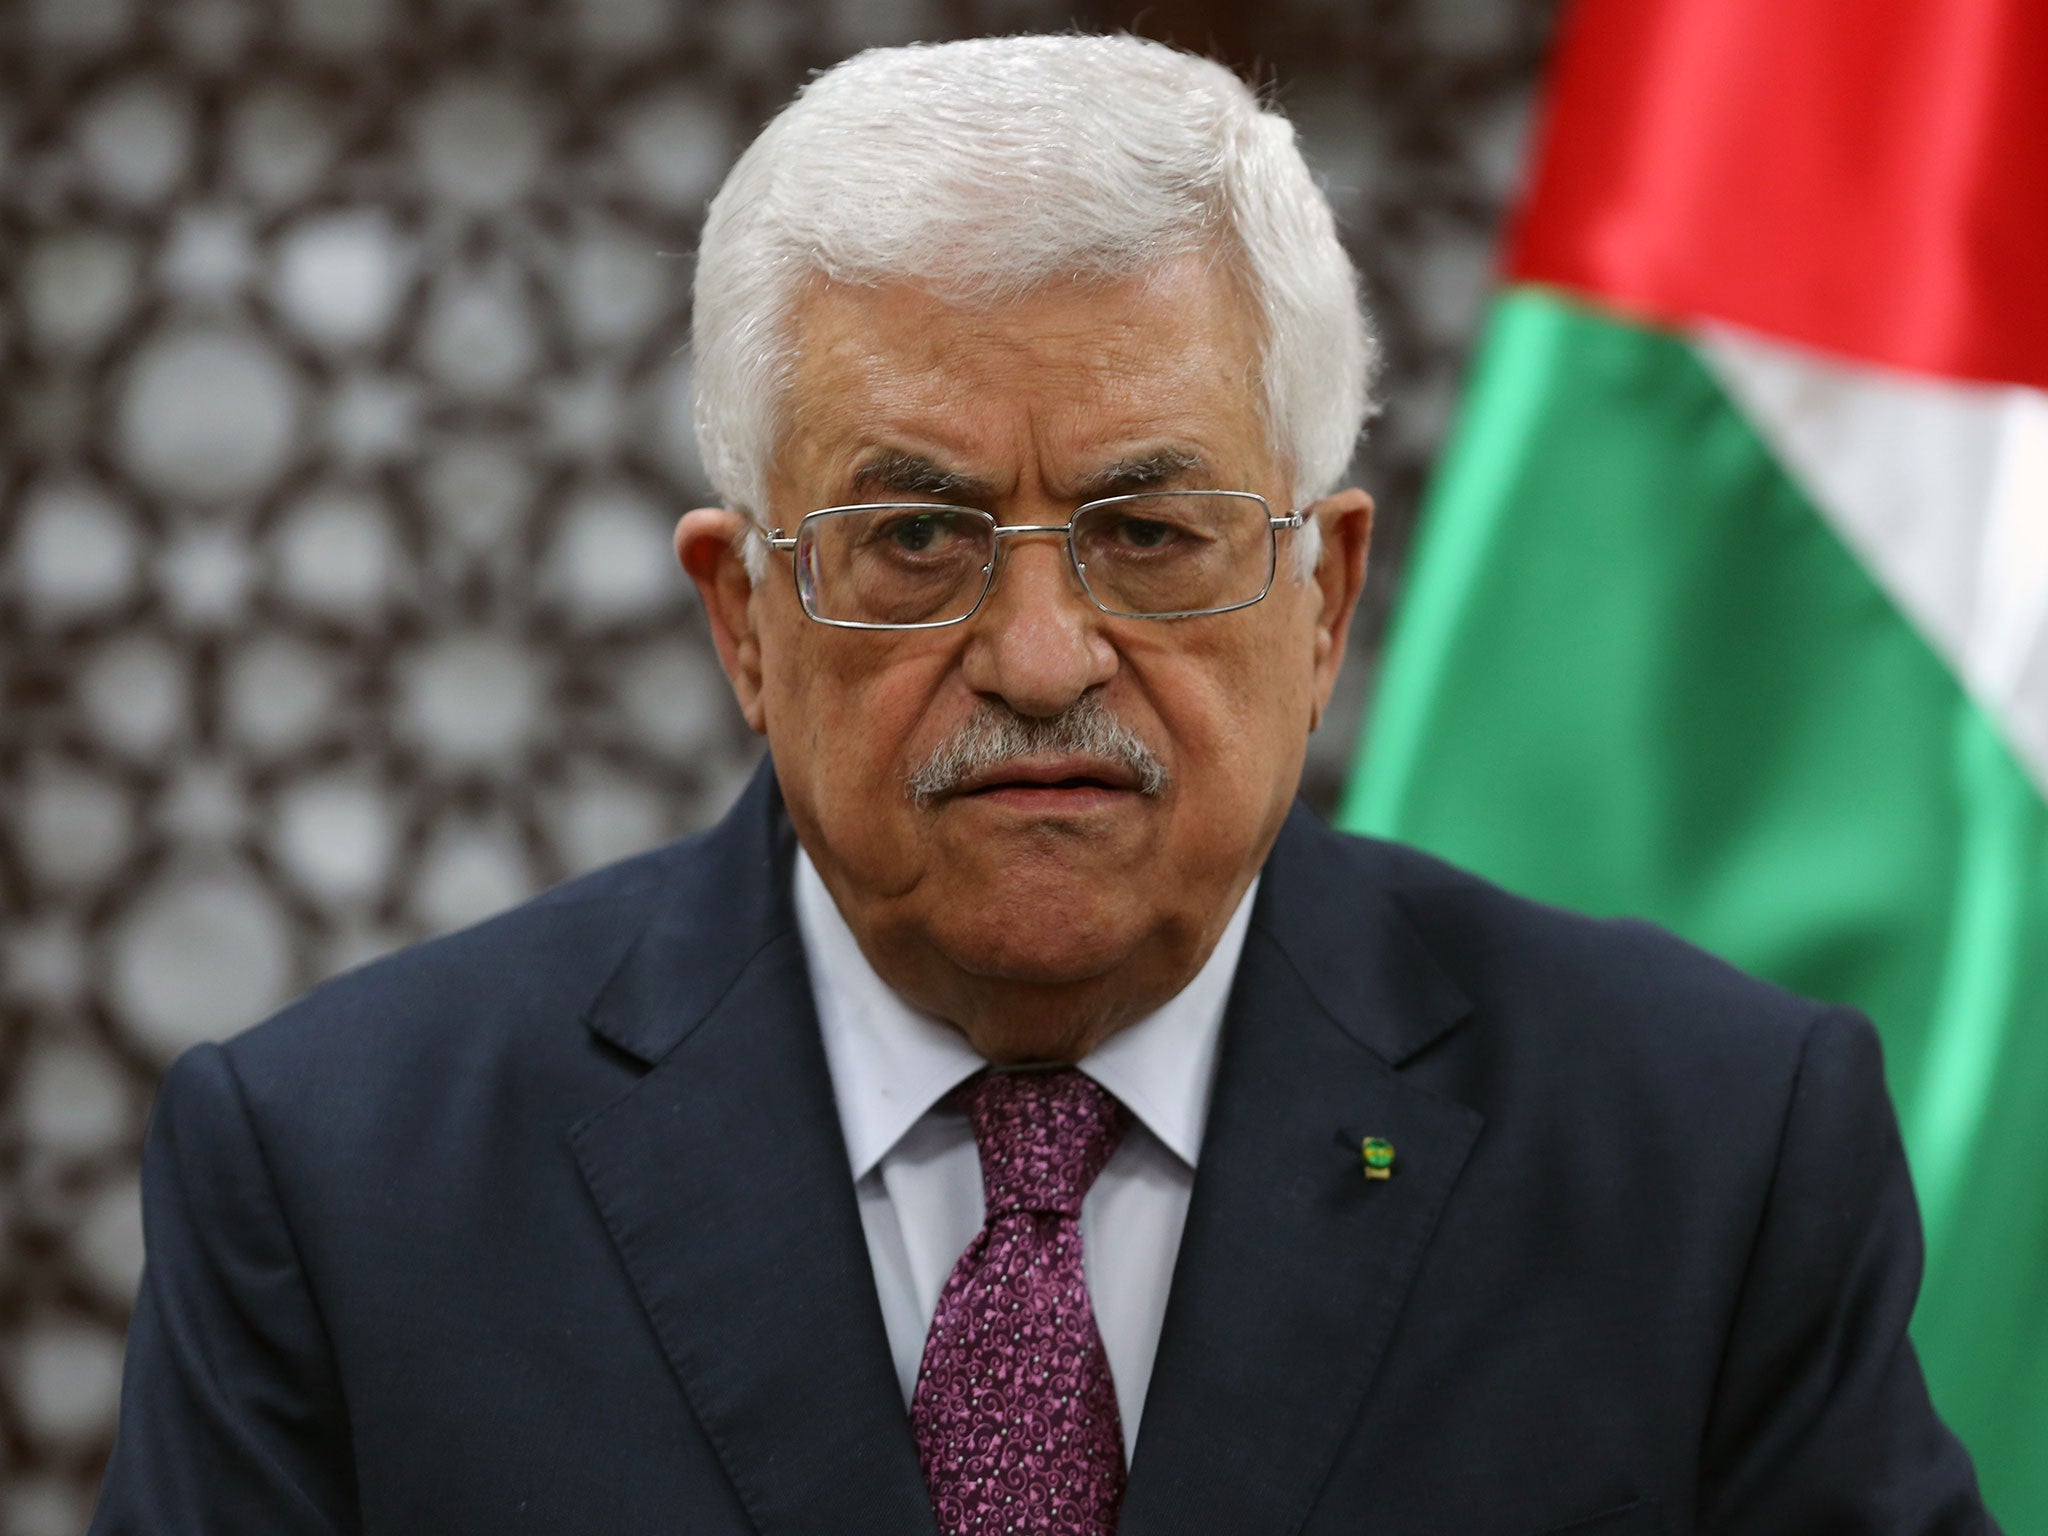 Palestinian President Mahmoud Abbas warns Donald Trump not to move US